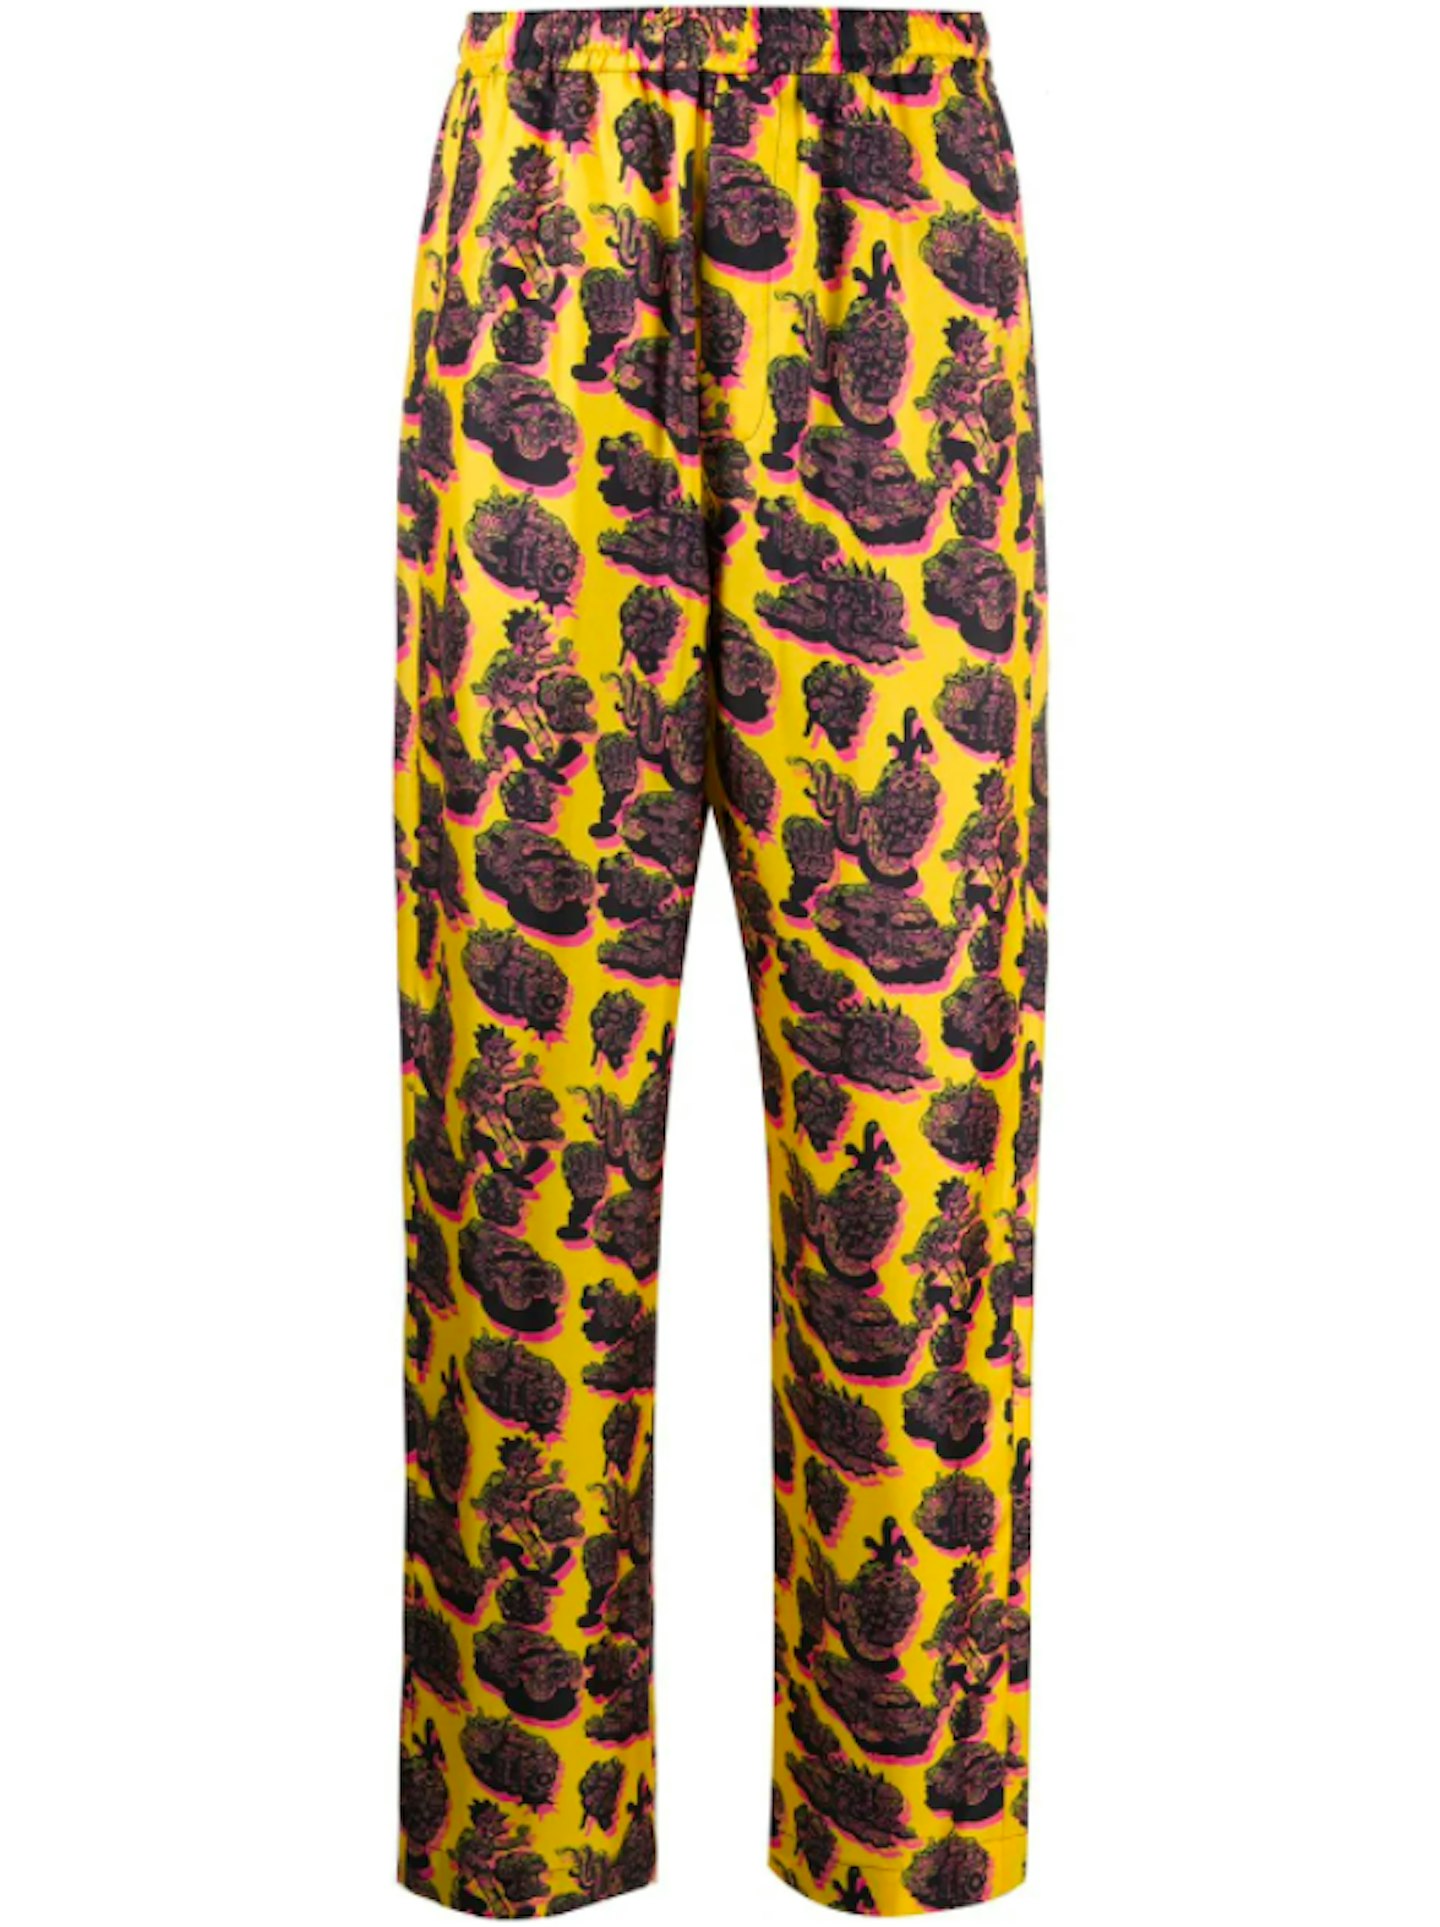 Stella McCartney, Graphic print trousers, £675